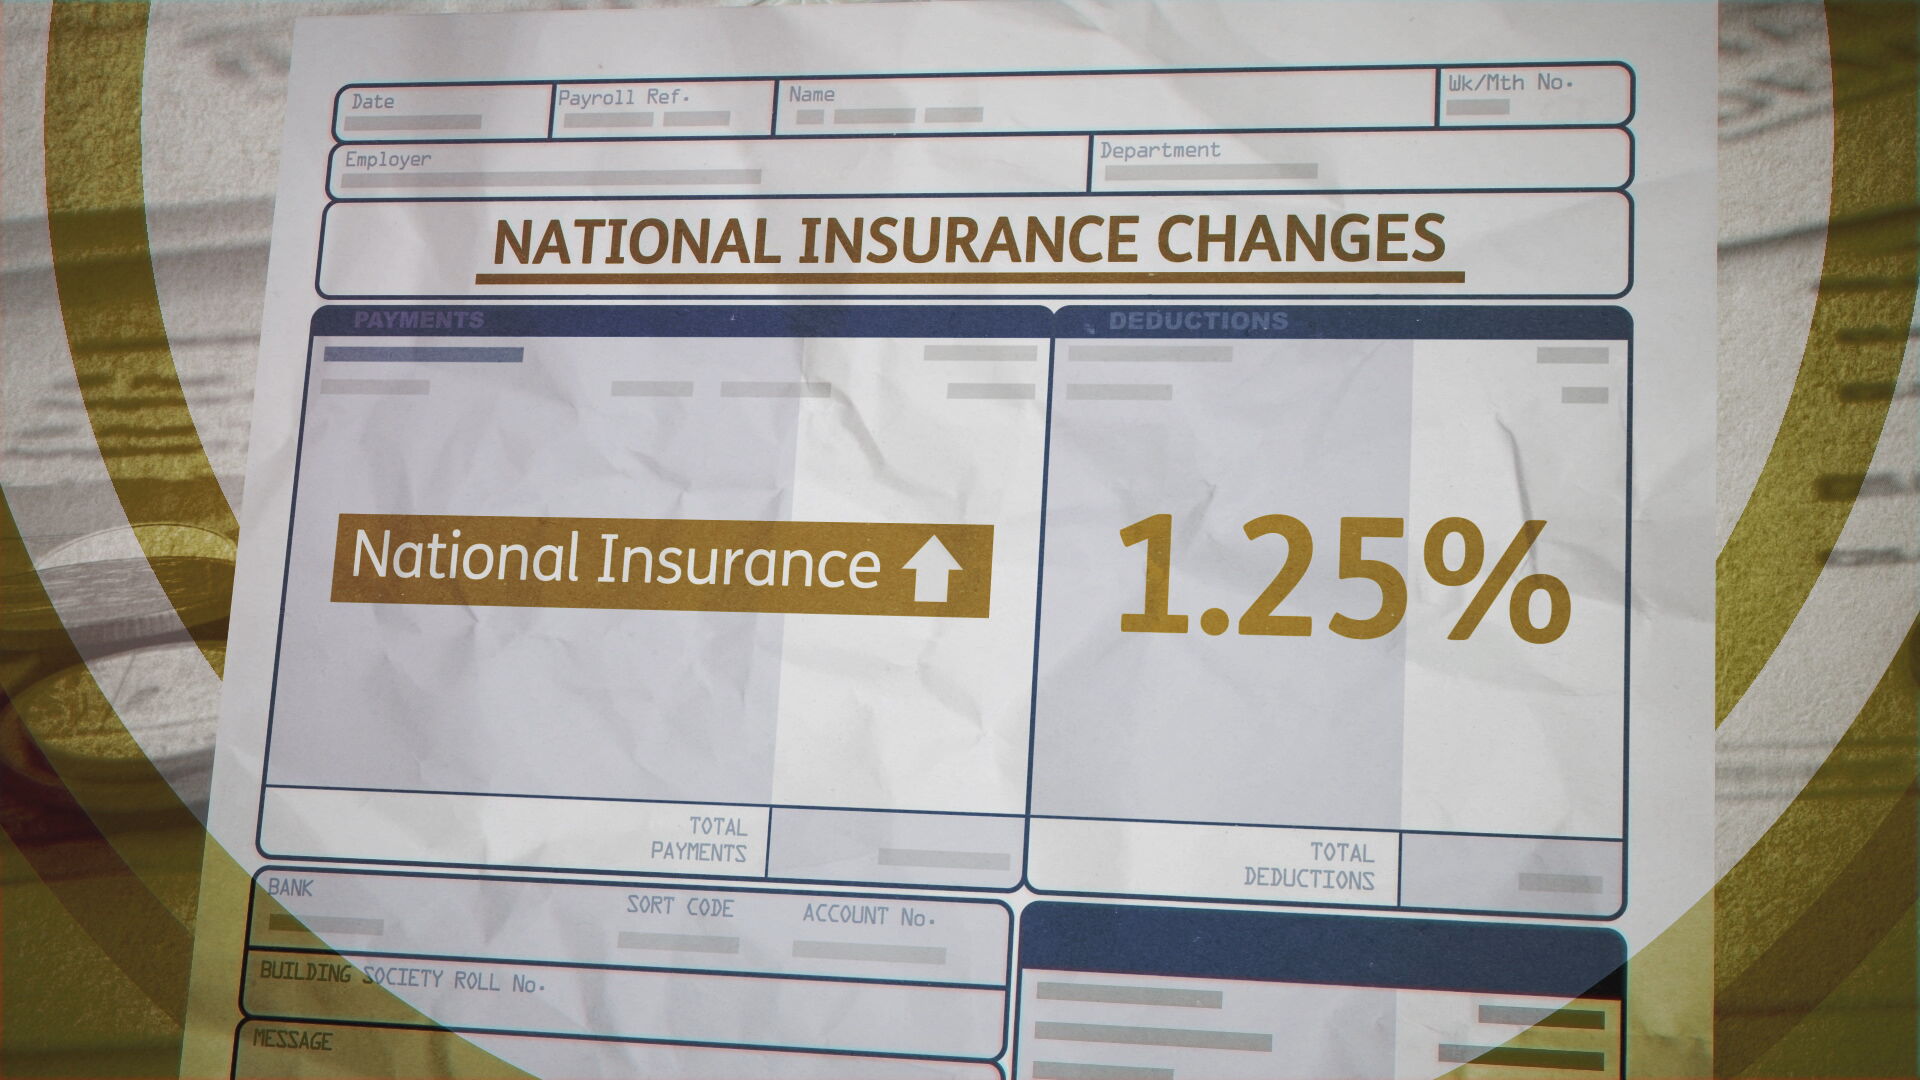 National Insurance.